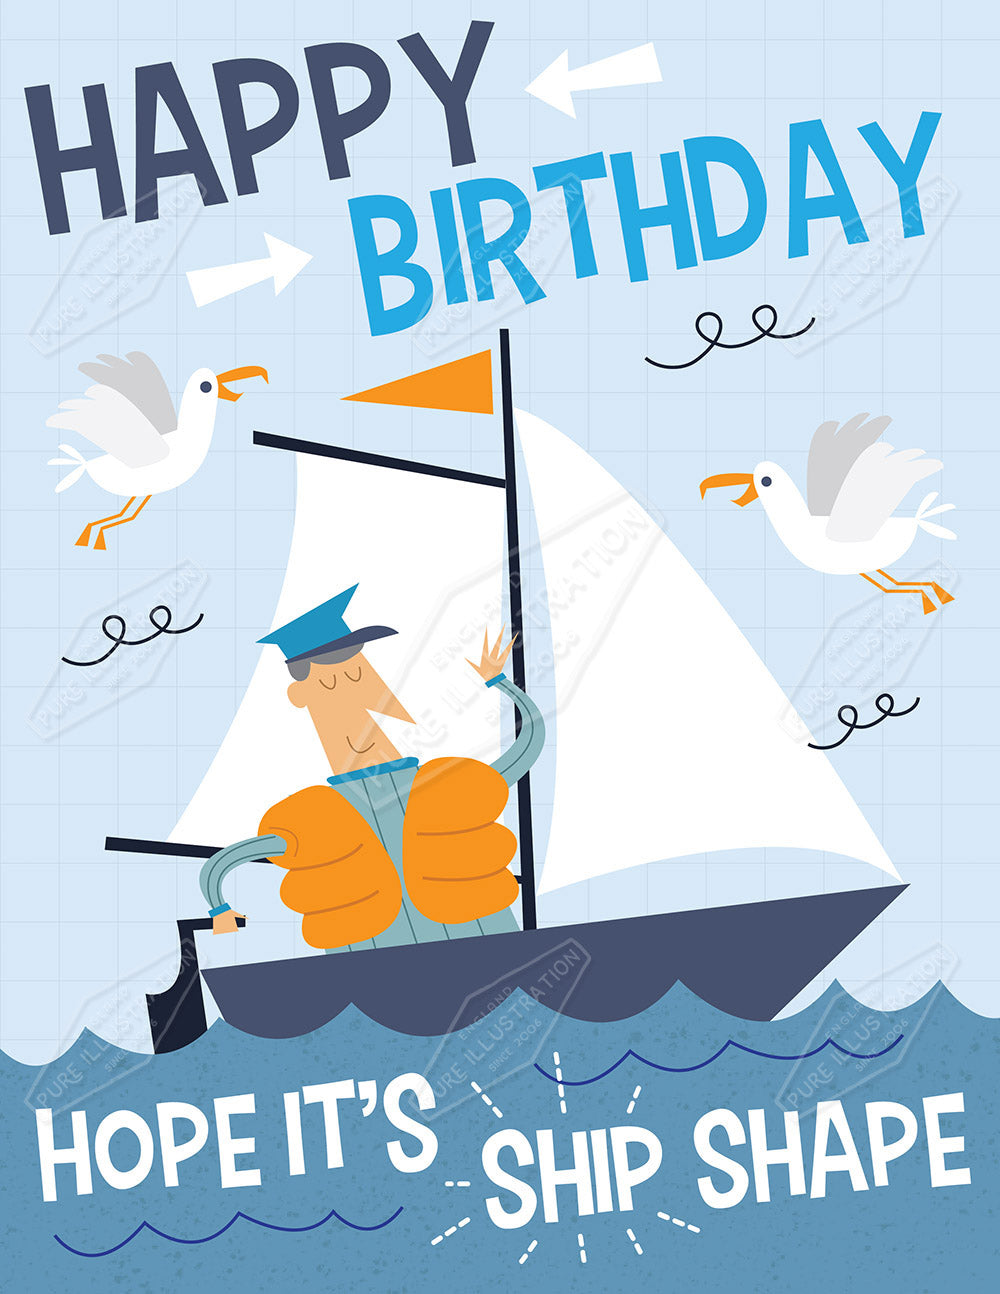 00032862RSW - Luke Swinney is represented by Pure Art Licensing Agency - Birthday Greeting Card Design